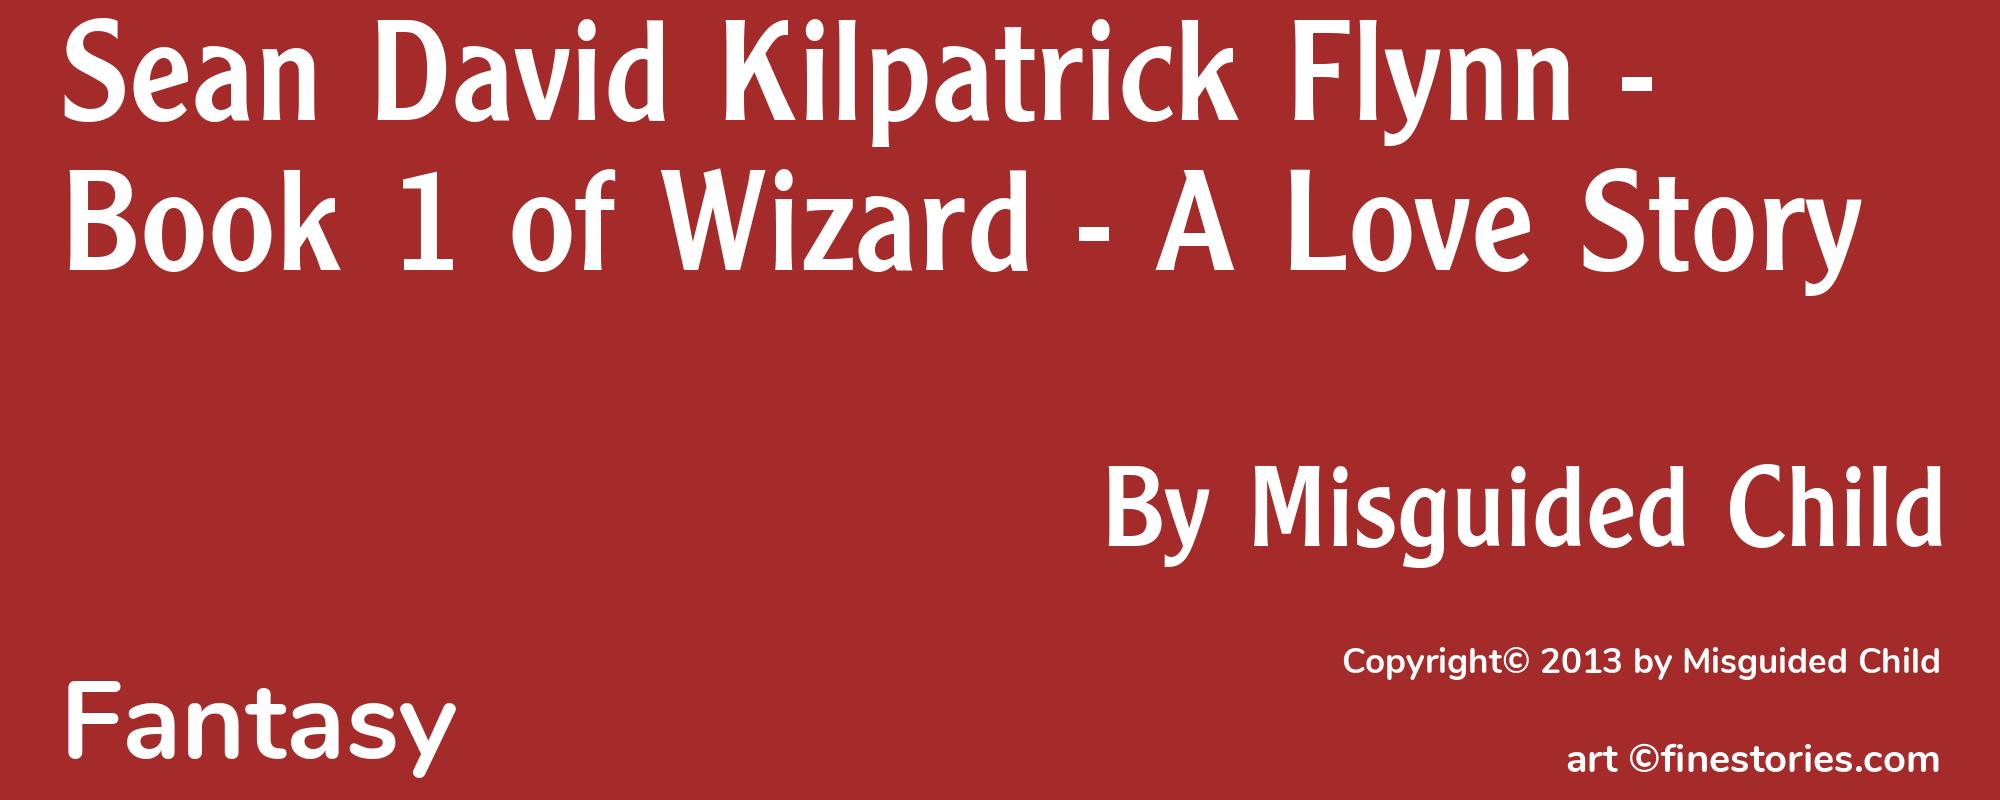 Sean David Kilpatrick Flynn - Book 1 of Wizard - A Love Story - Cover